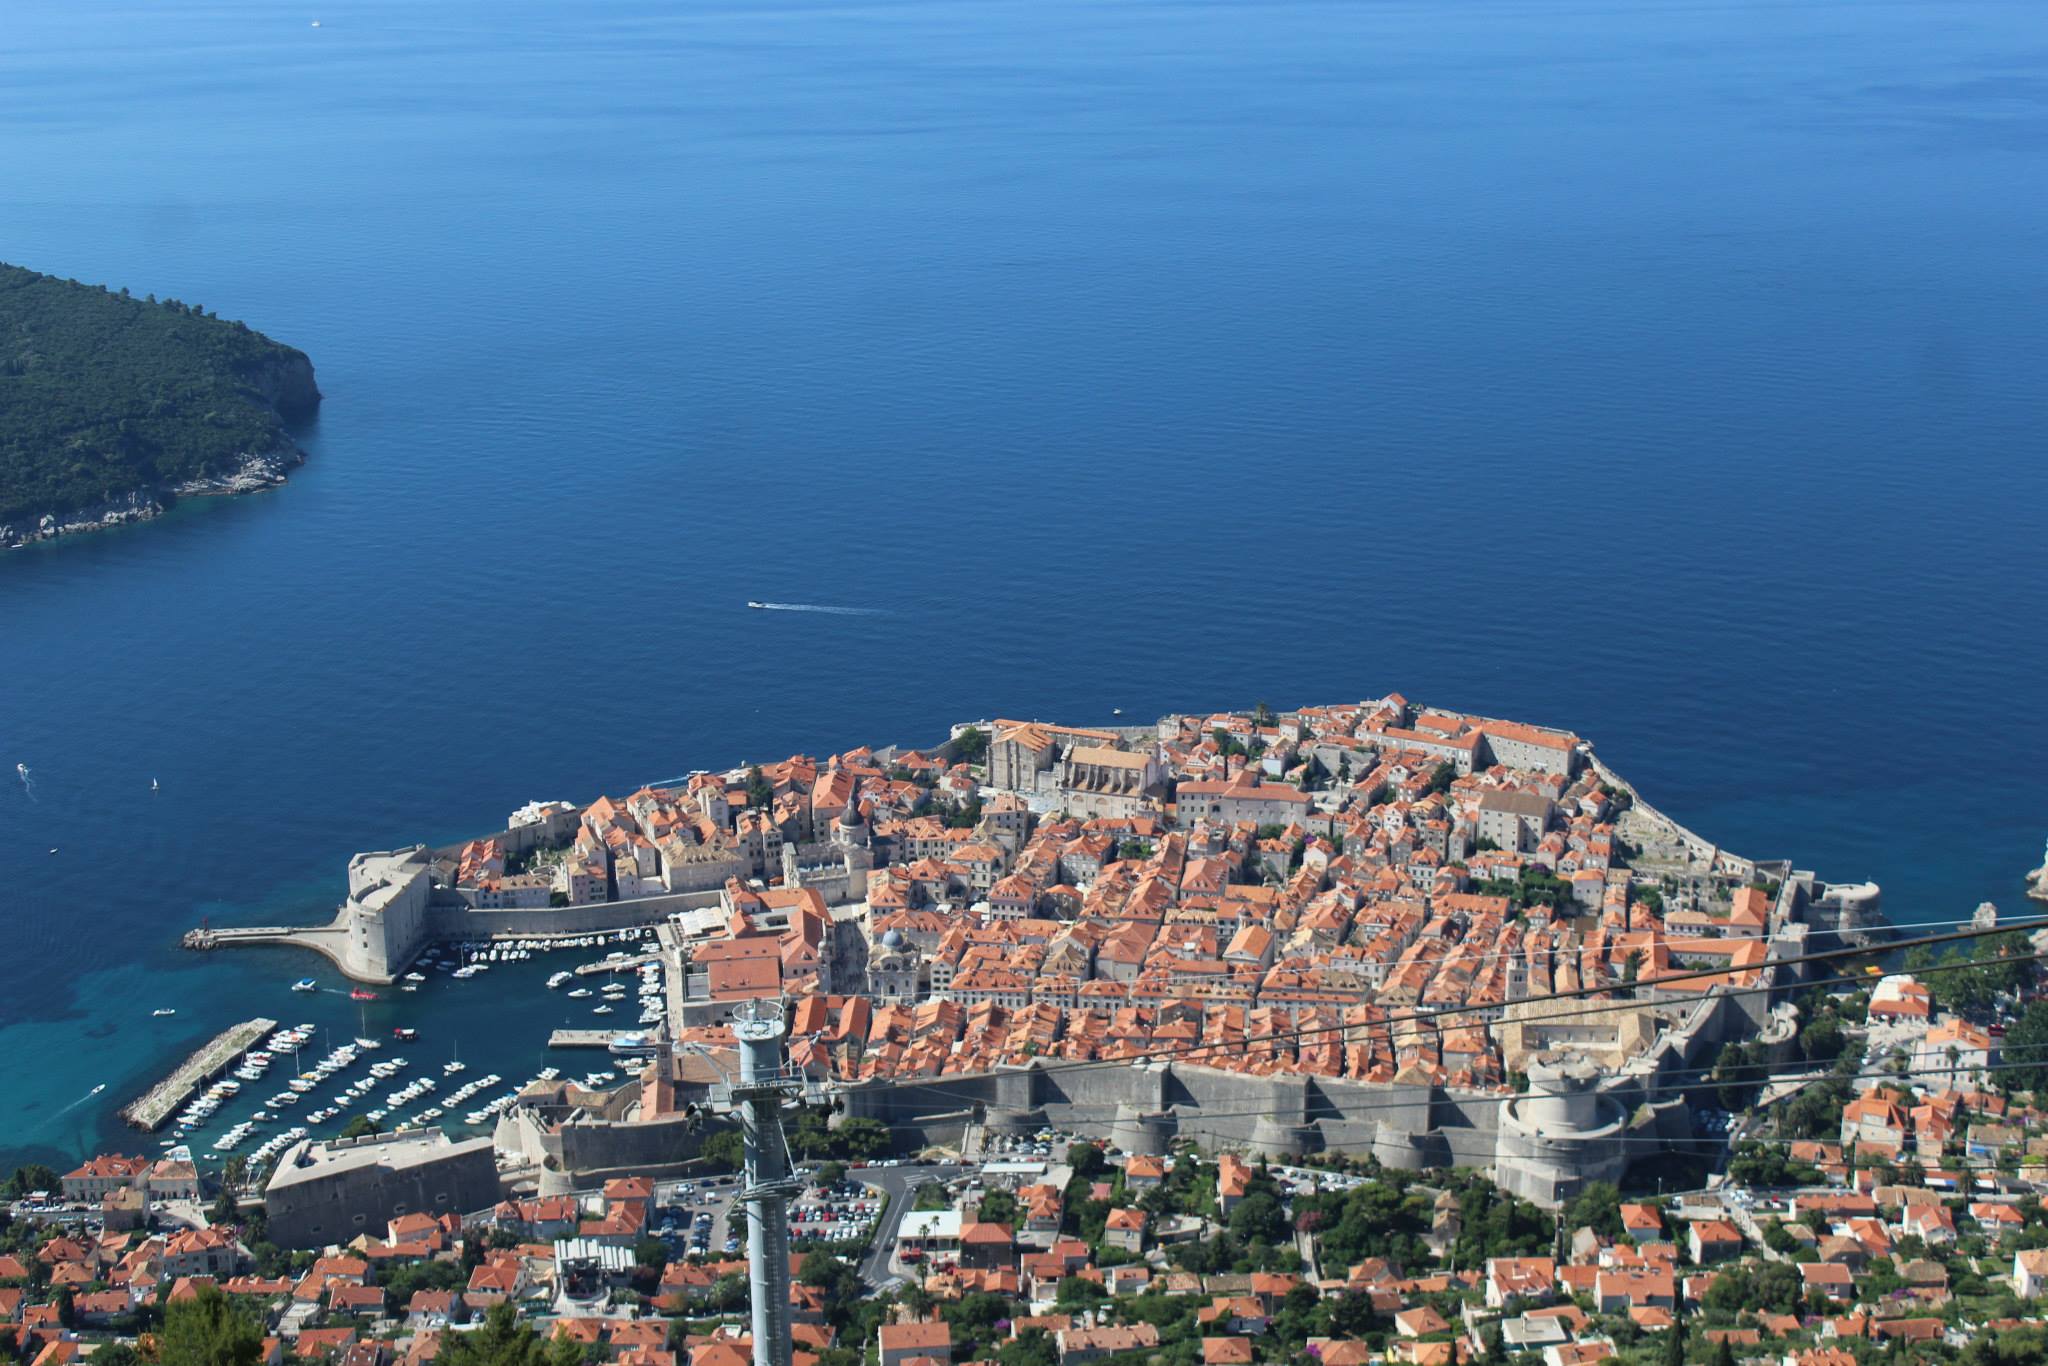 King’s Landing – Beautiful walled city of Dubrovnik